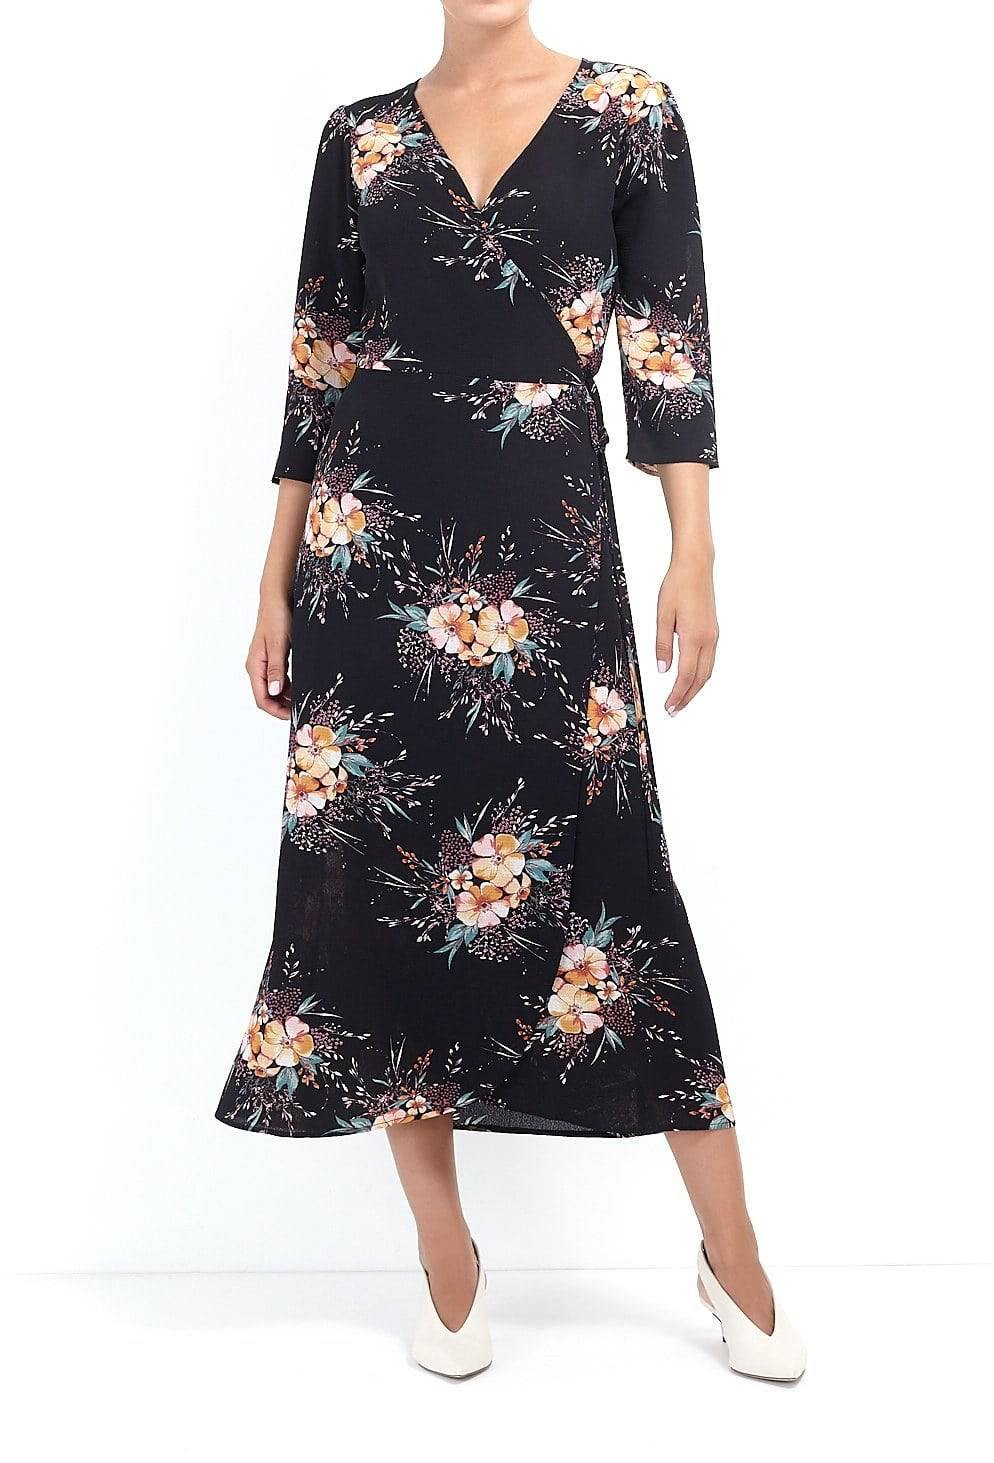 Long Length Black Floral Print Wrap Dress | Miss Bold